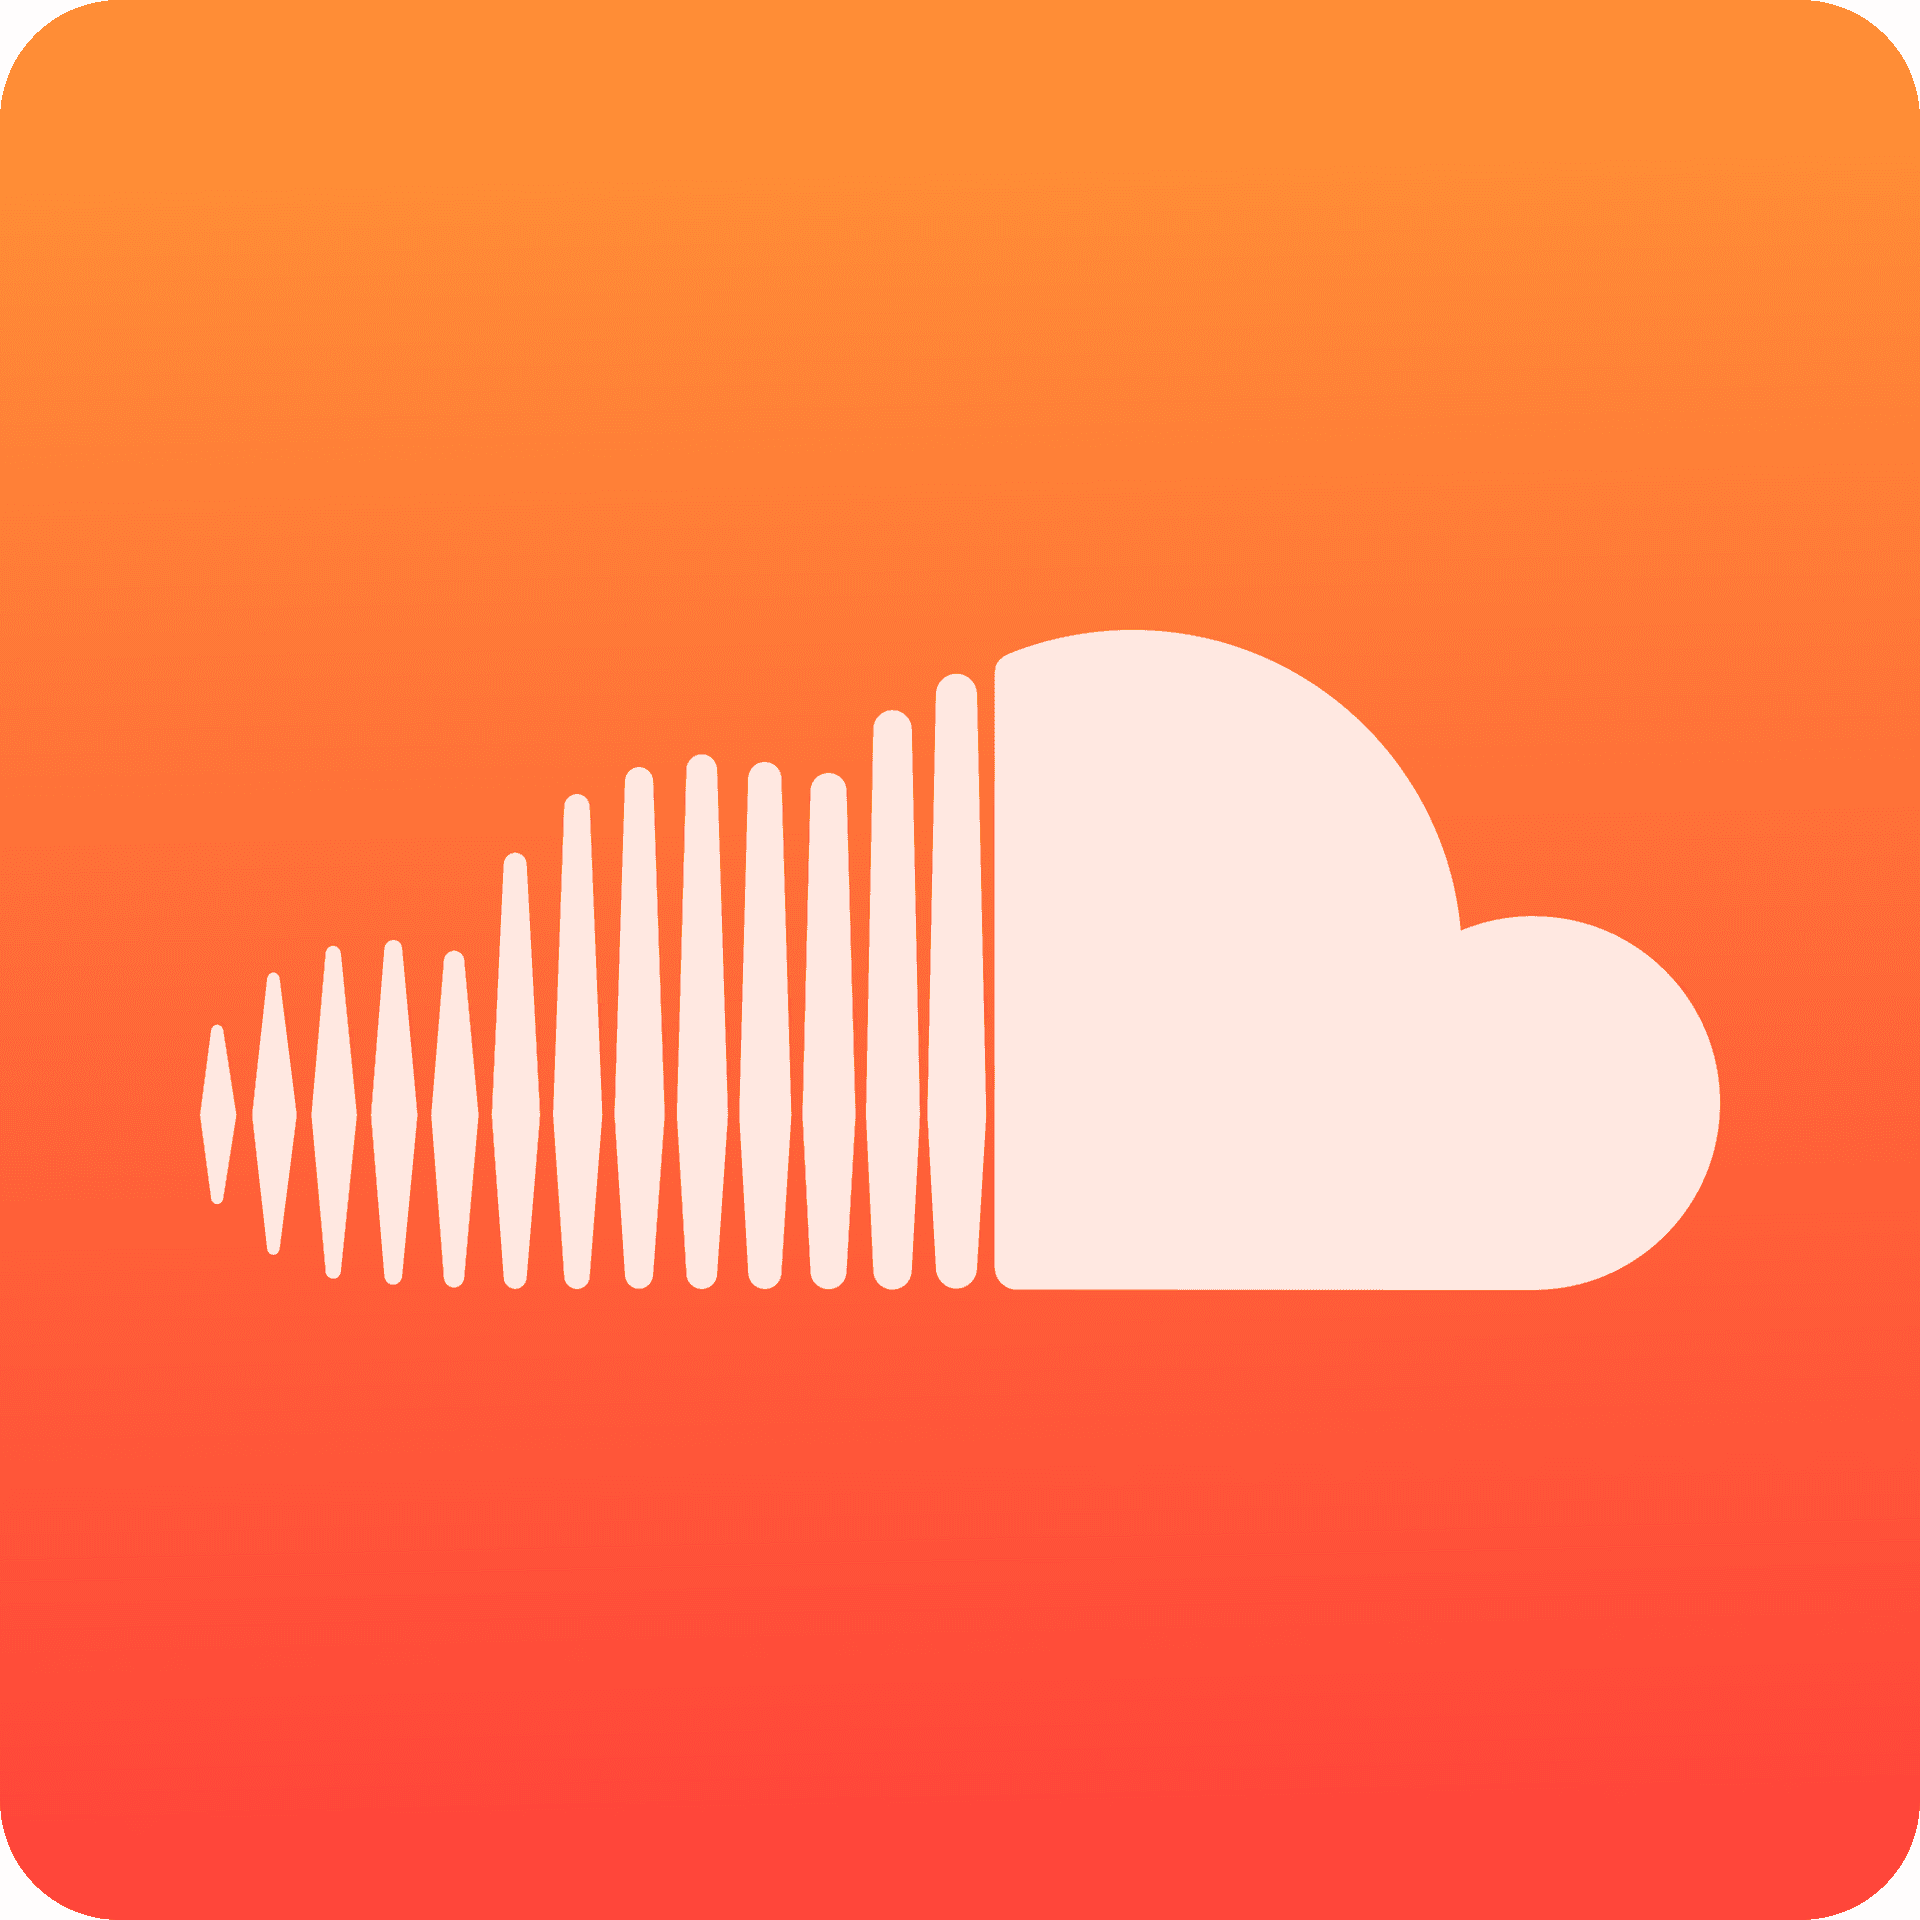 Erstelleund Teile Musik Mit Soundcloud